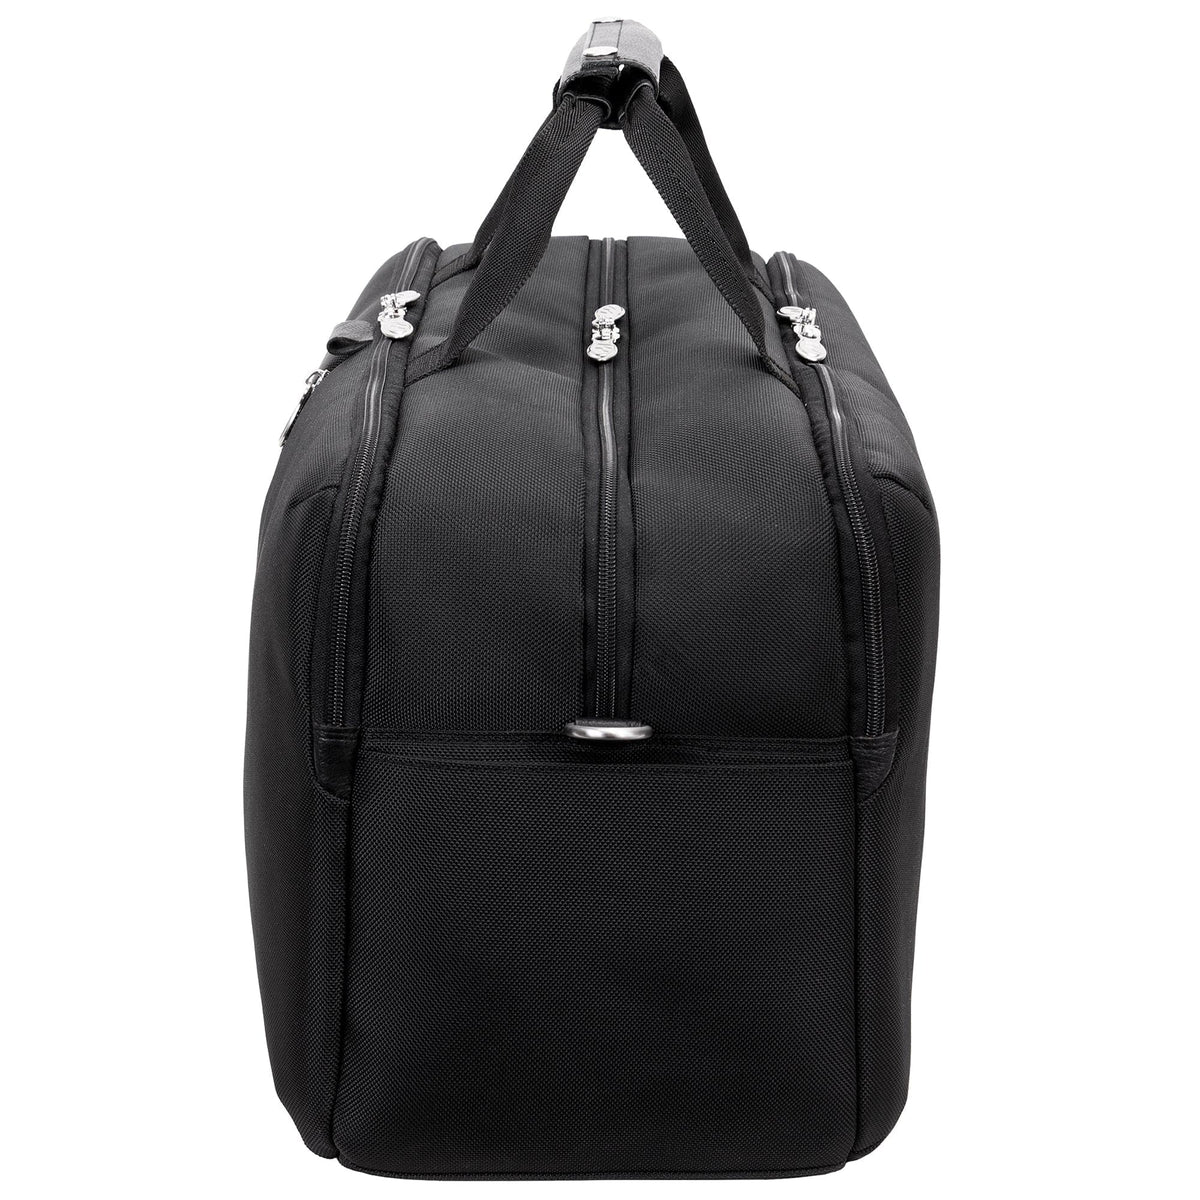 McKlein U Series 22" Avondale Triple Compartment Carry-All Travel Laptop Nylon Duffel Bag